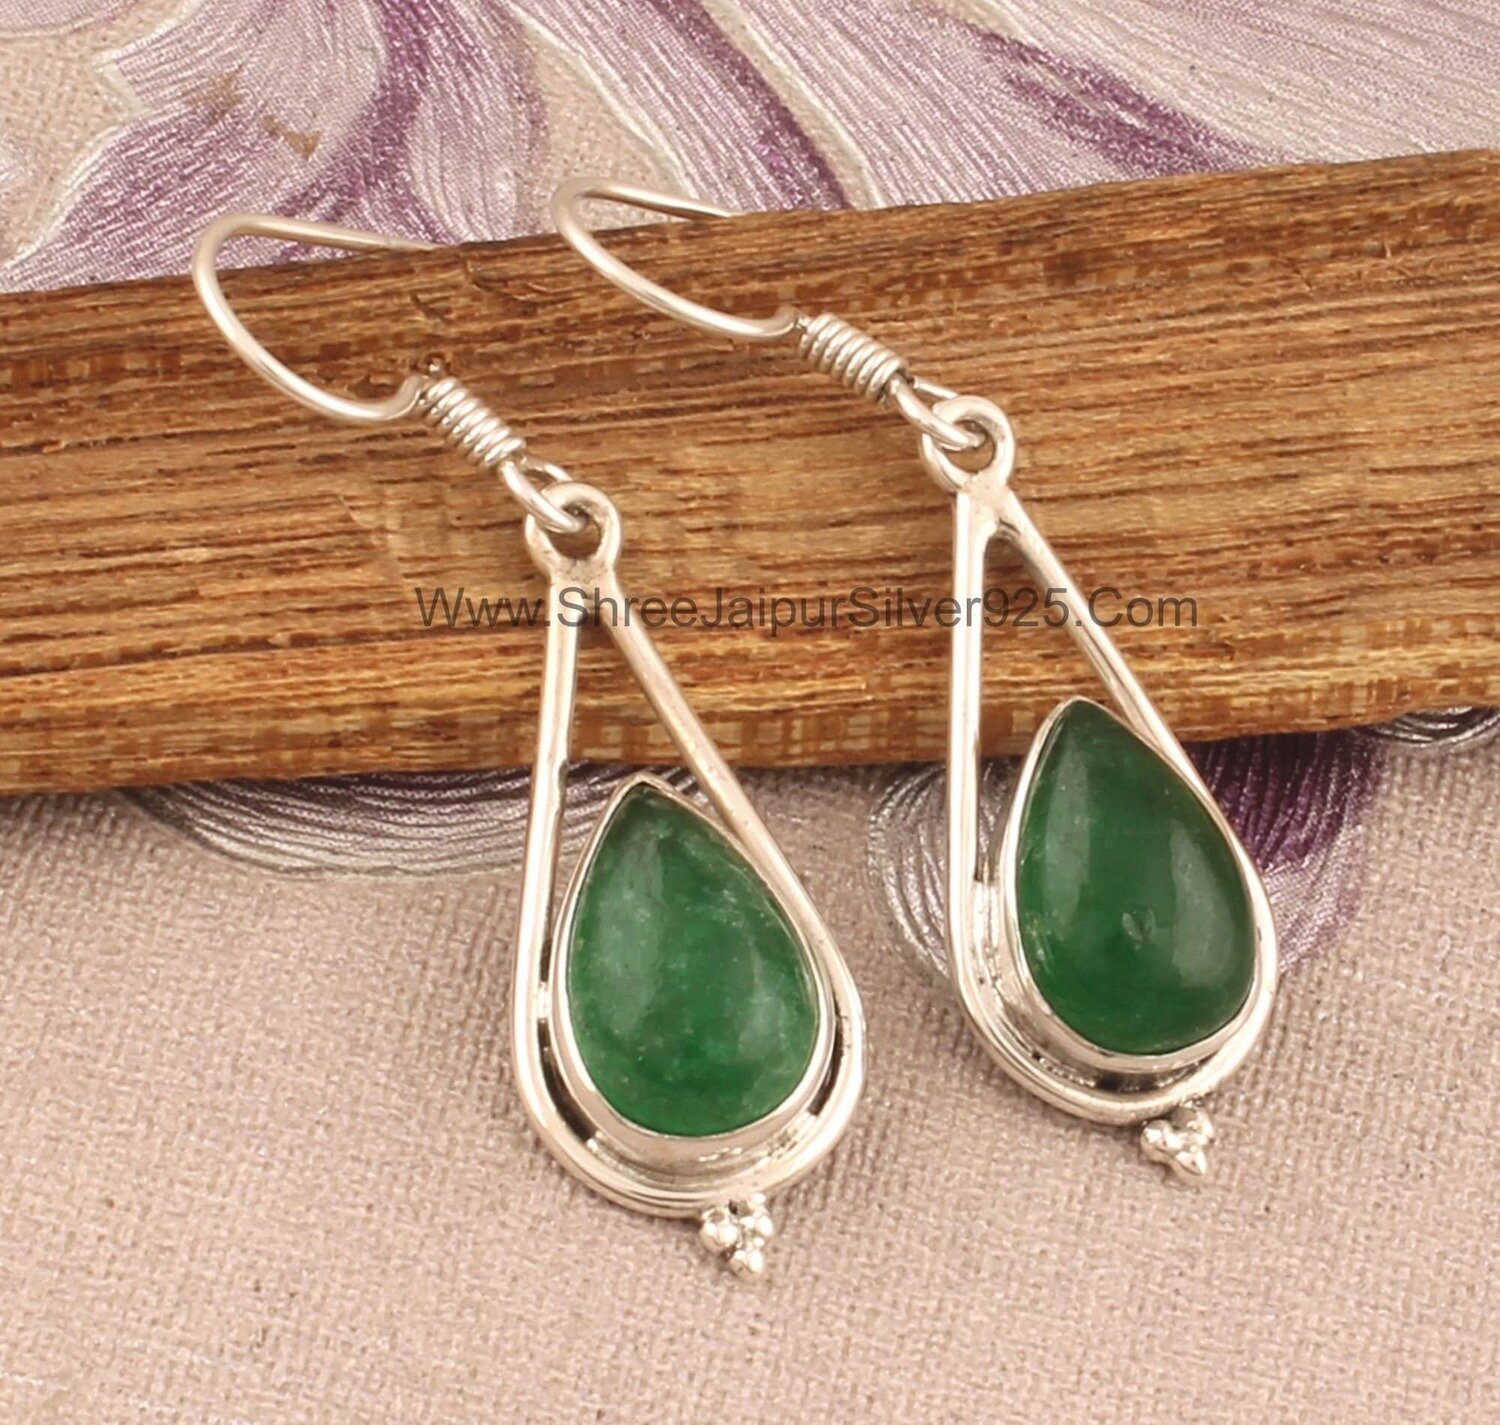 Green Jade Pear Stone Solid 925 Sterling Silver Earrings For Women, Handmade Designer Silver Earrings For Wedding Anniversary Gift For Her